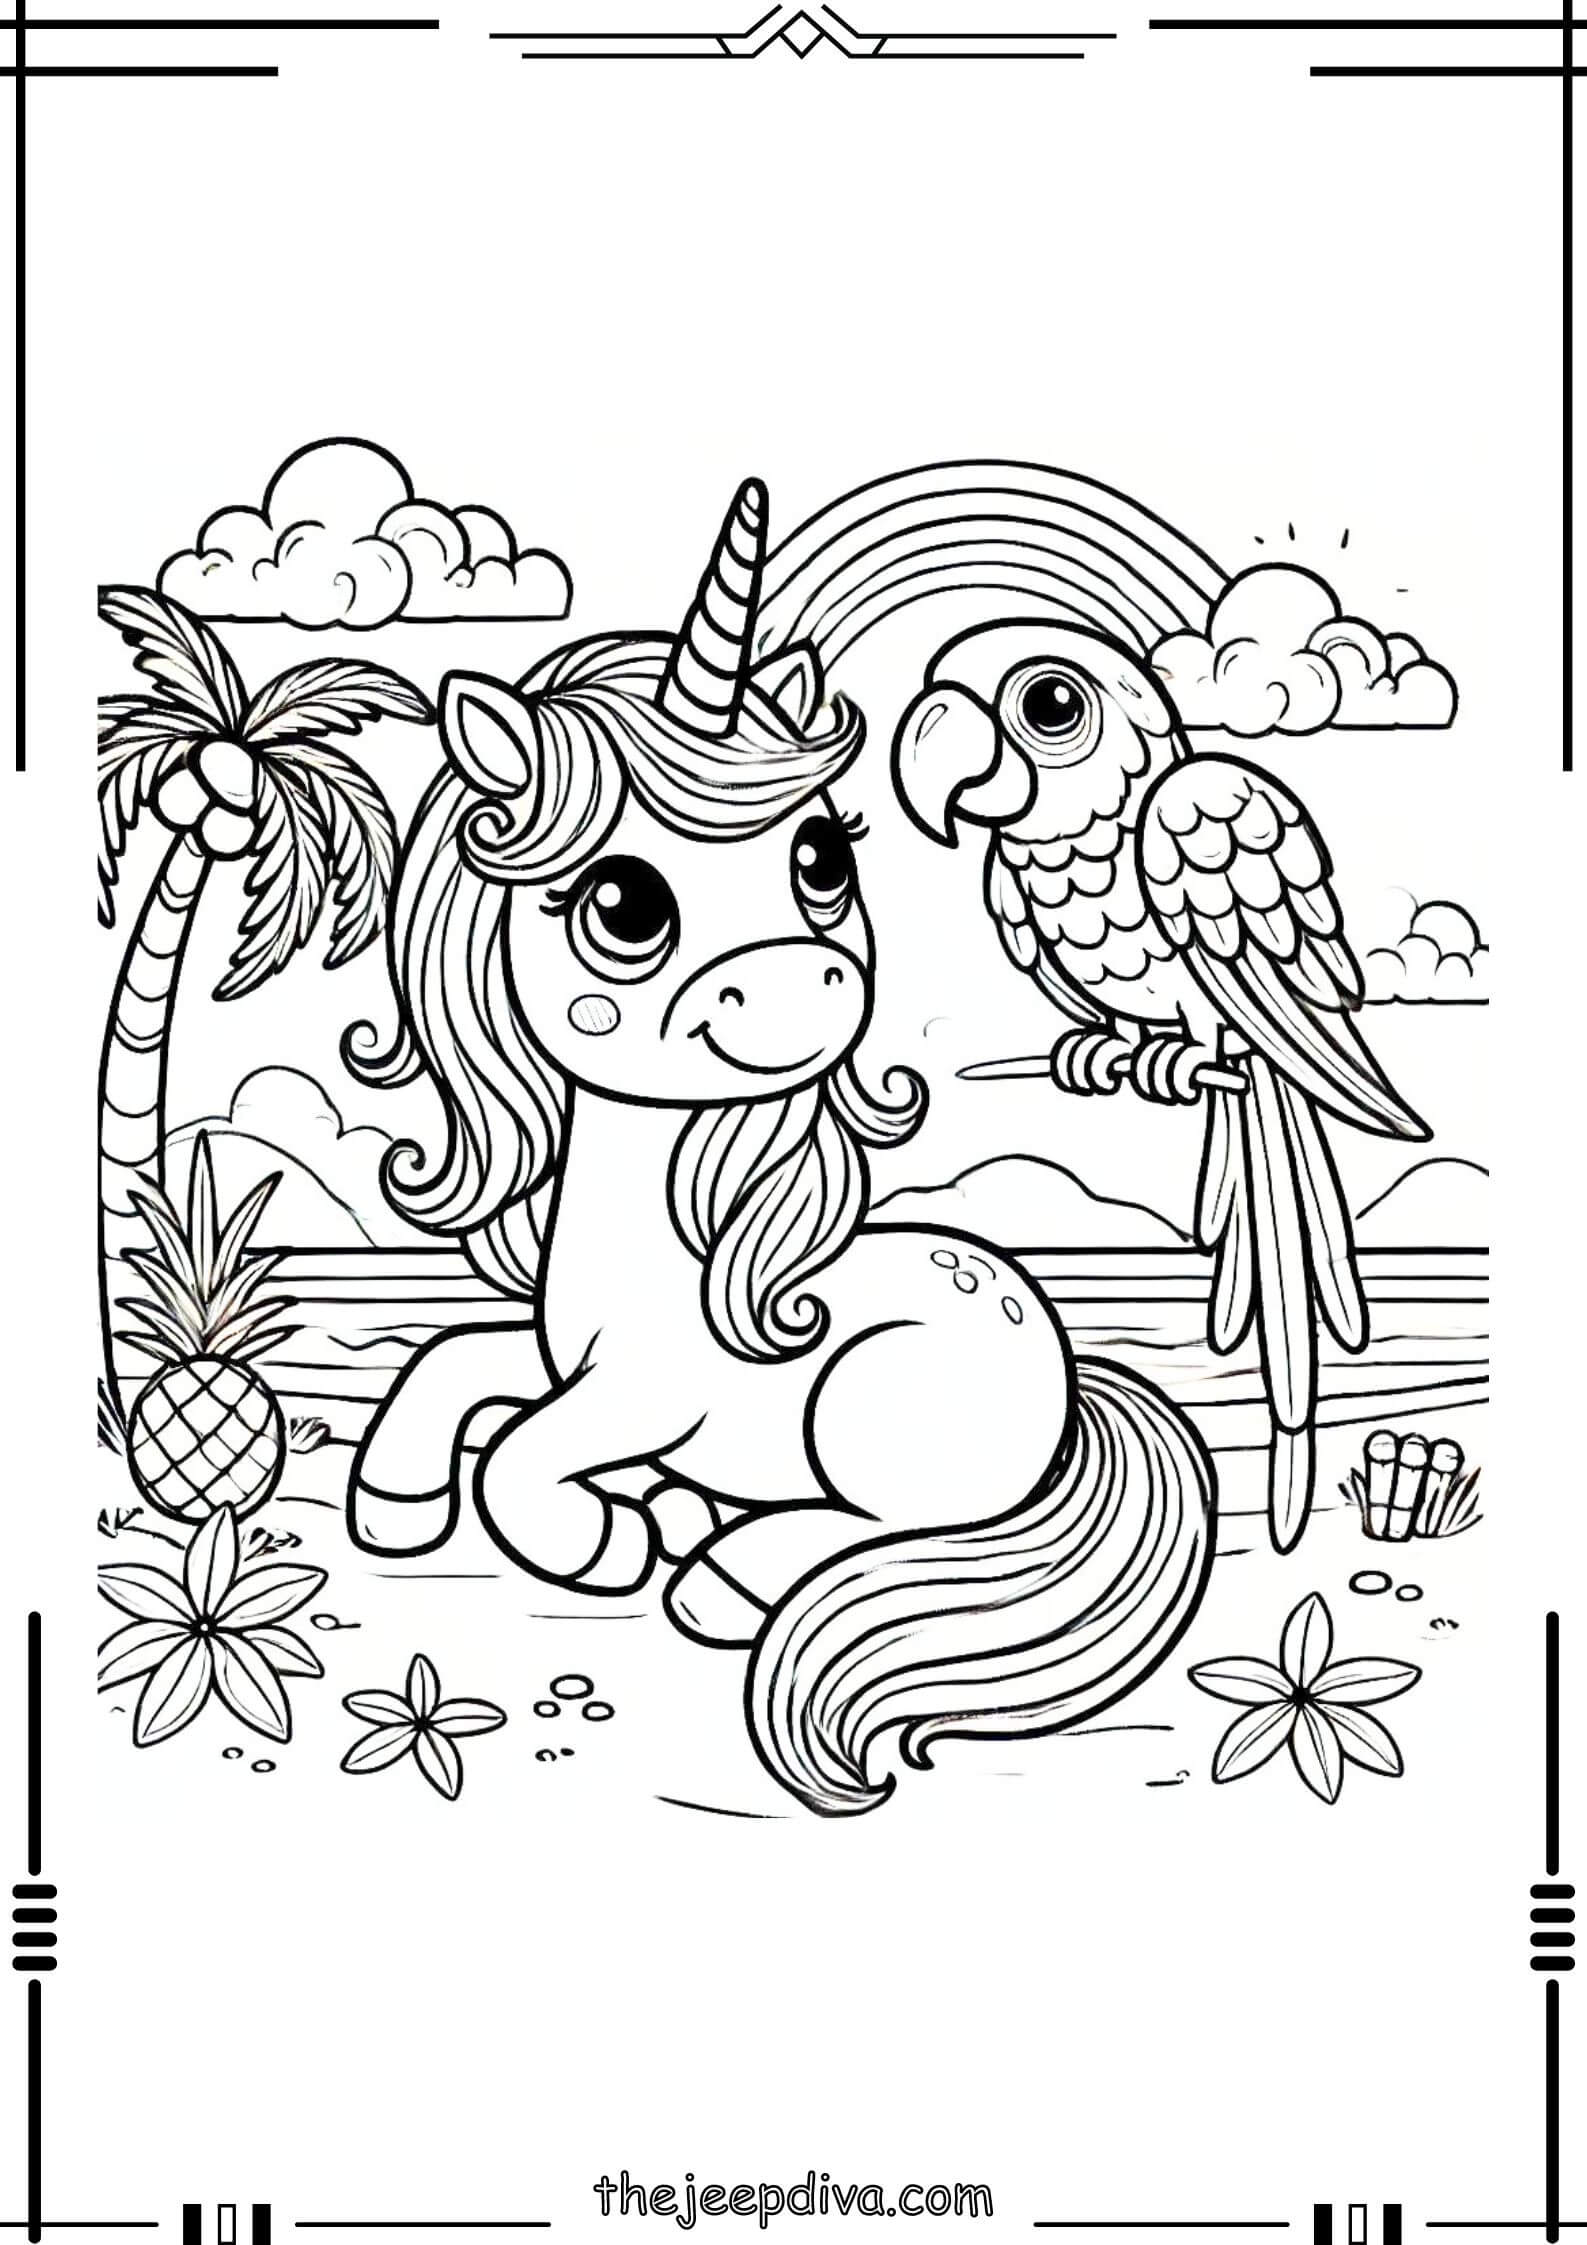 unicorn-coloring-page-hard-12